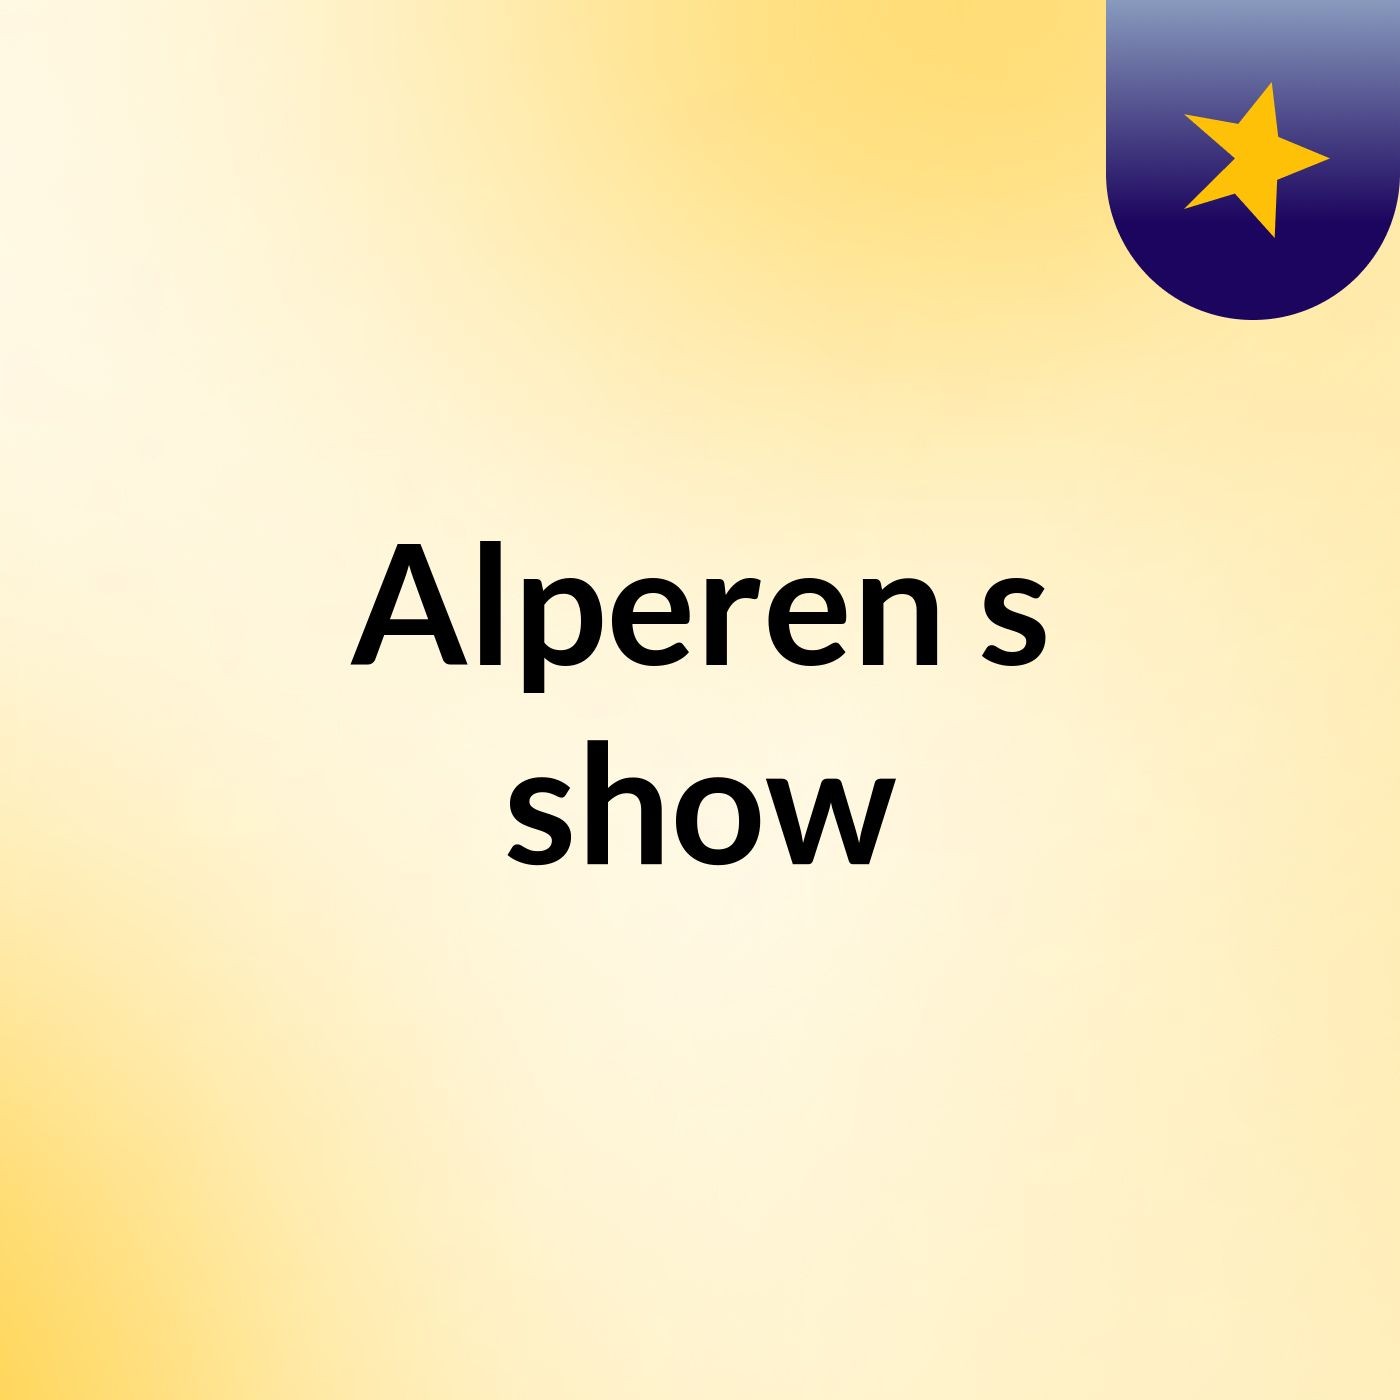 Alperen's show